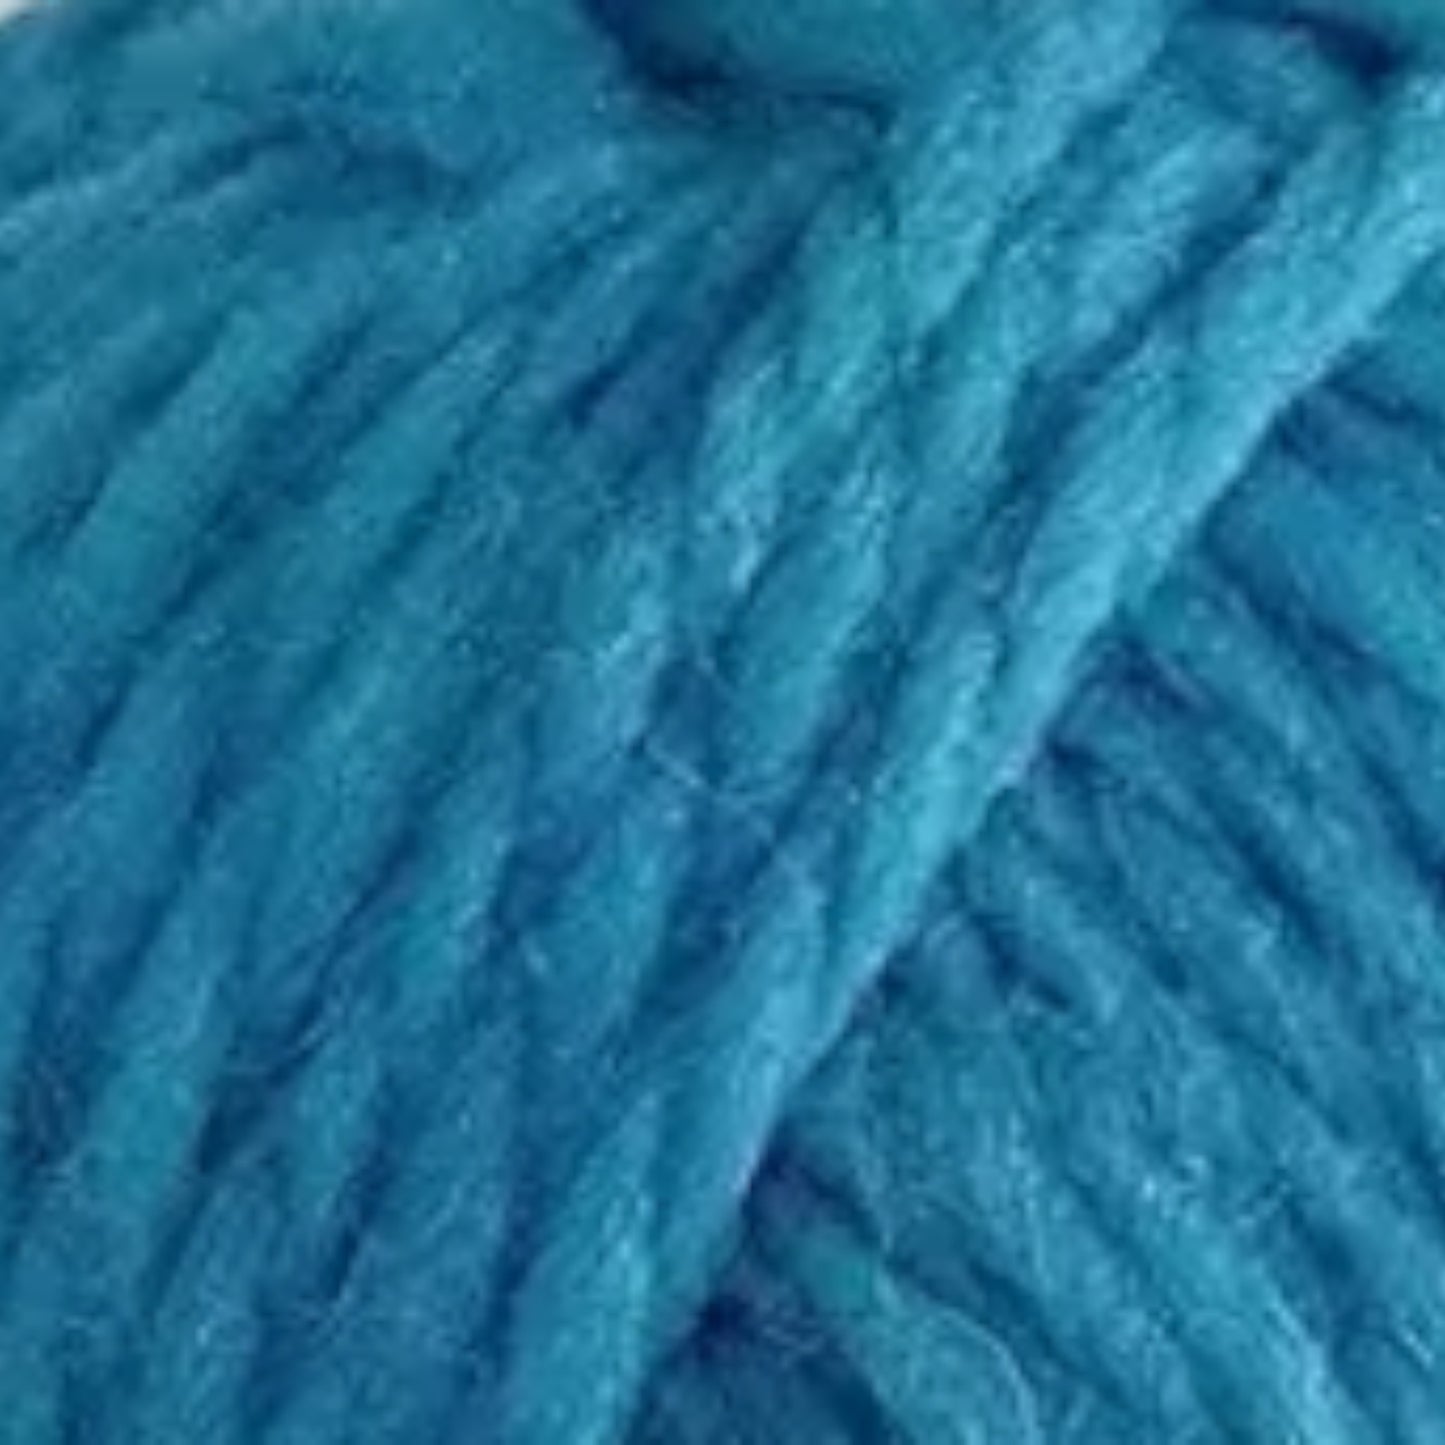 Stitch & Spool Solid Merino Jumbo Wool Yarn - 100% Merino, 50g/54yd Skeins in 5 Colors